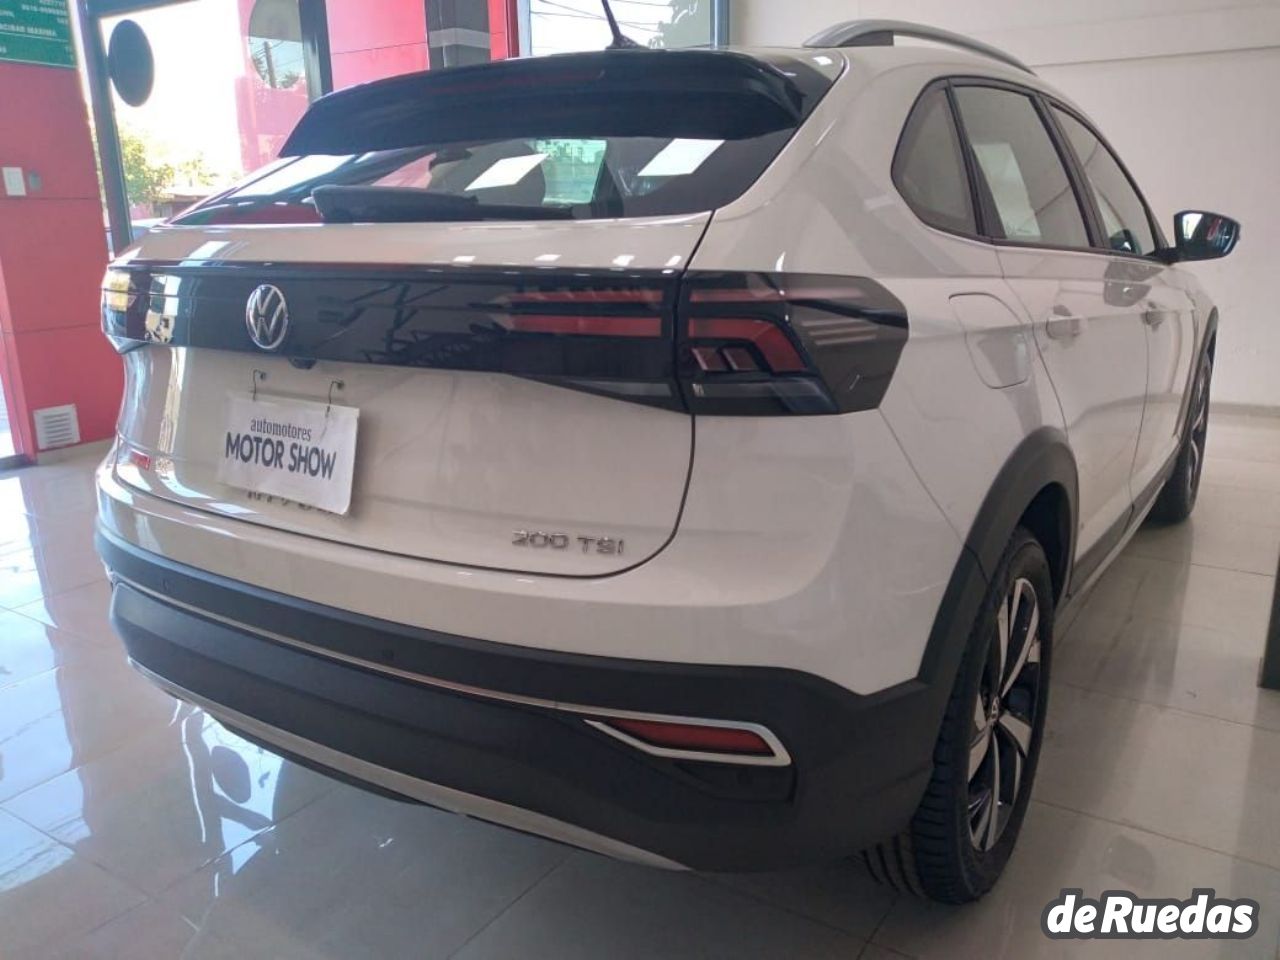 Volkswagen Nivus Nuevo en San Juan, deRuedas